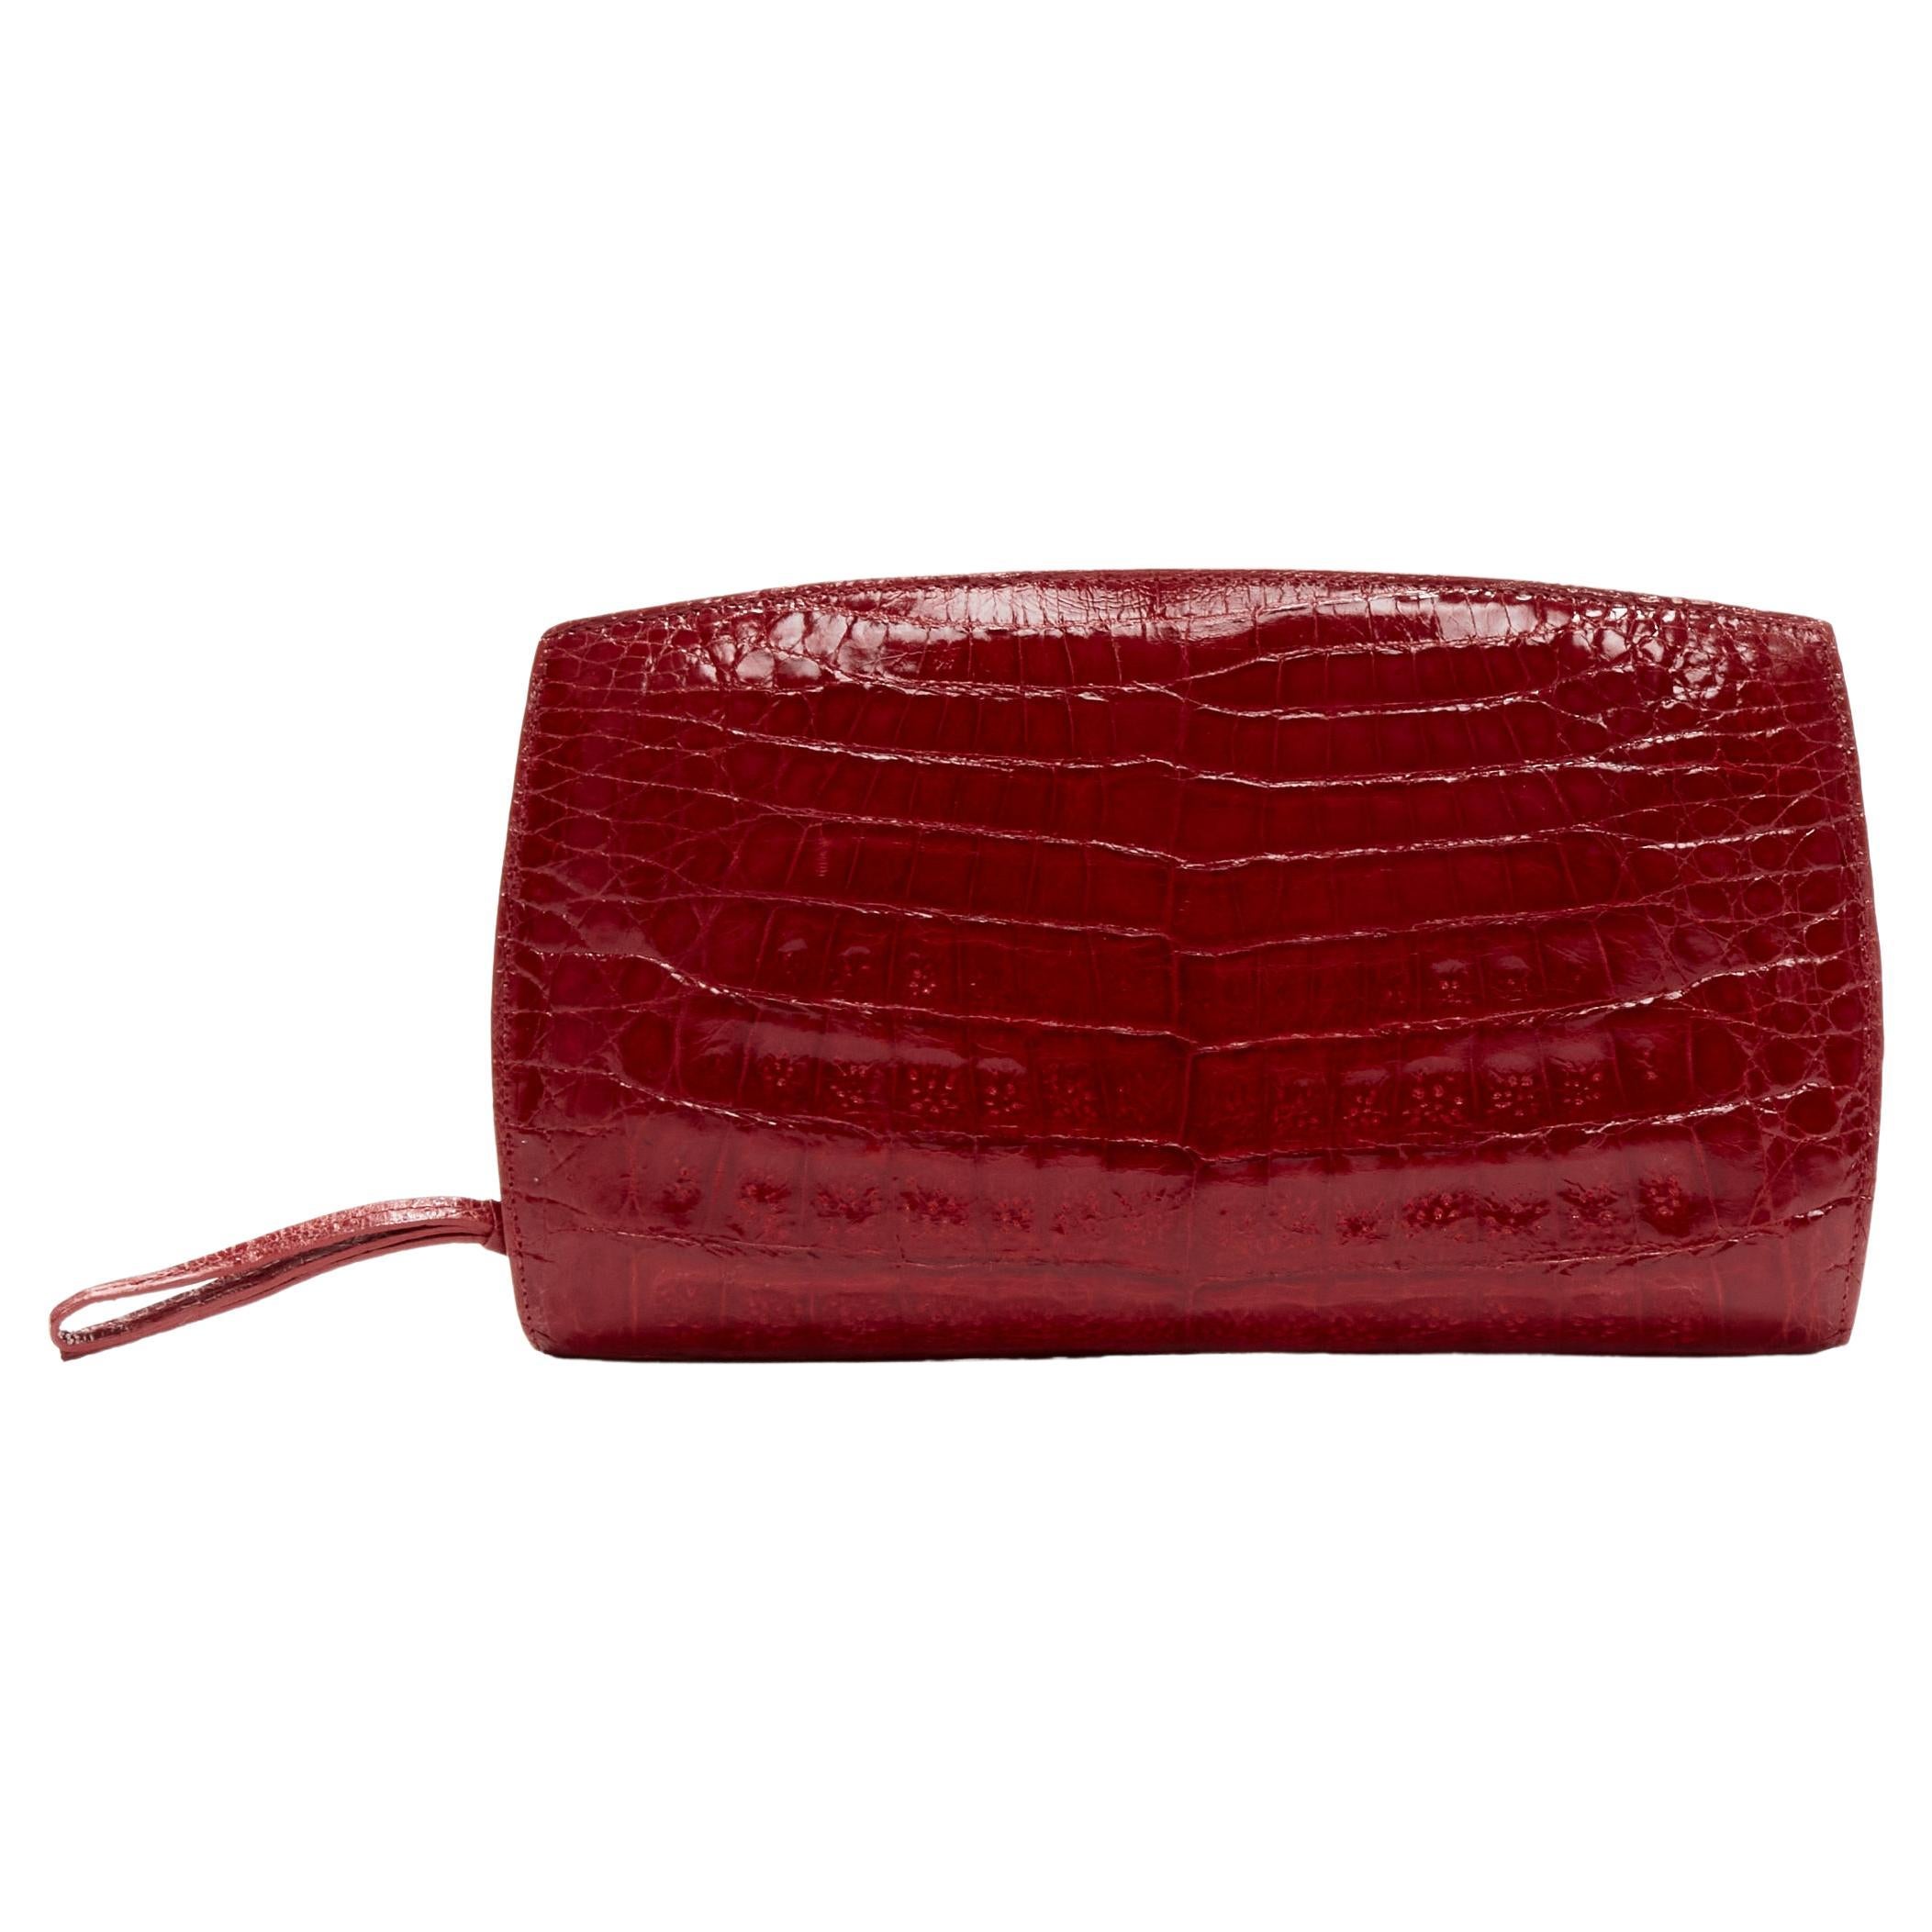 NANCY GONZALEZ red croc scaled leather luxe zip around clutch bag wallet For Sale